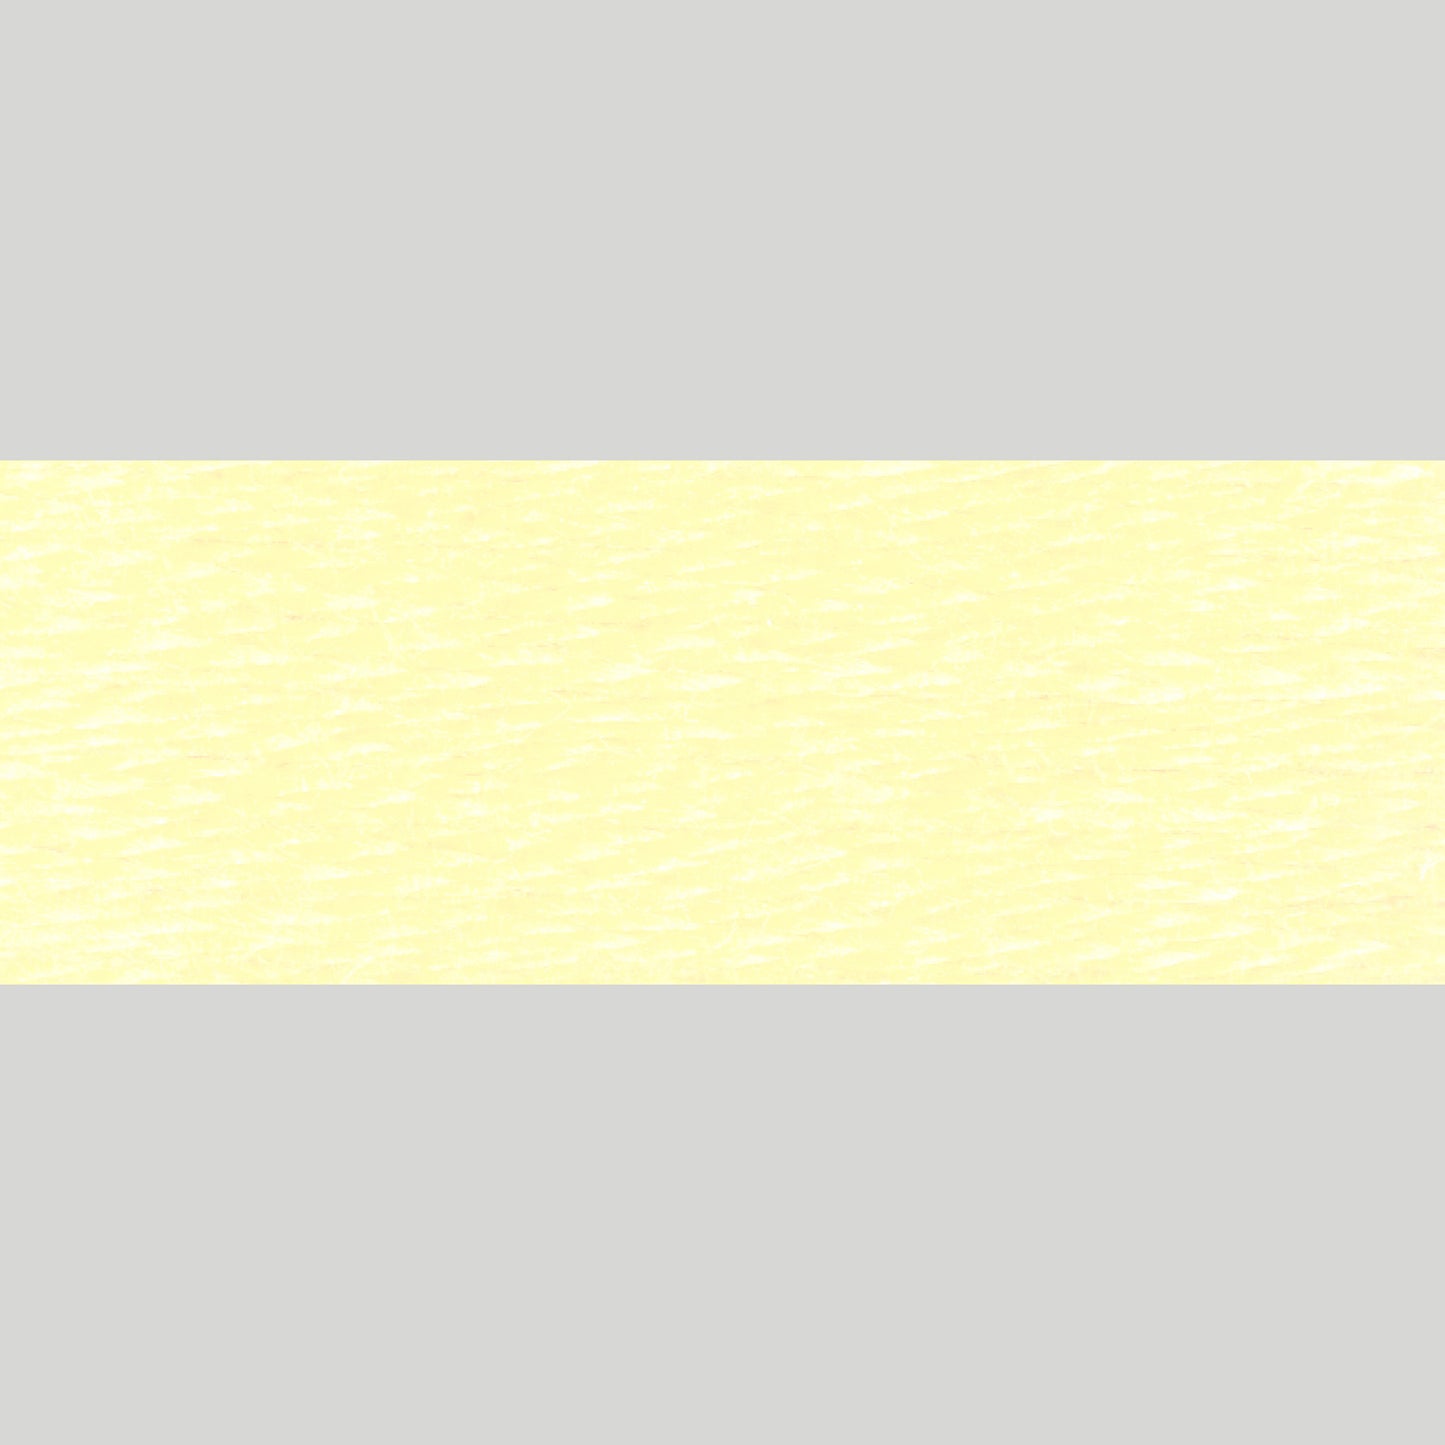 DMC Embroidery Floss - 3078 Very Light Golden Yellow Alternative View #1